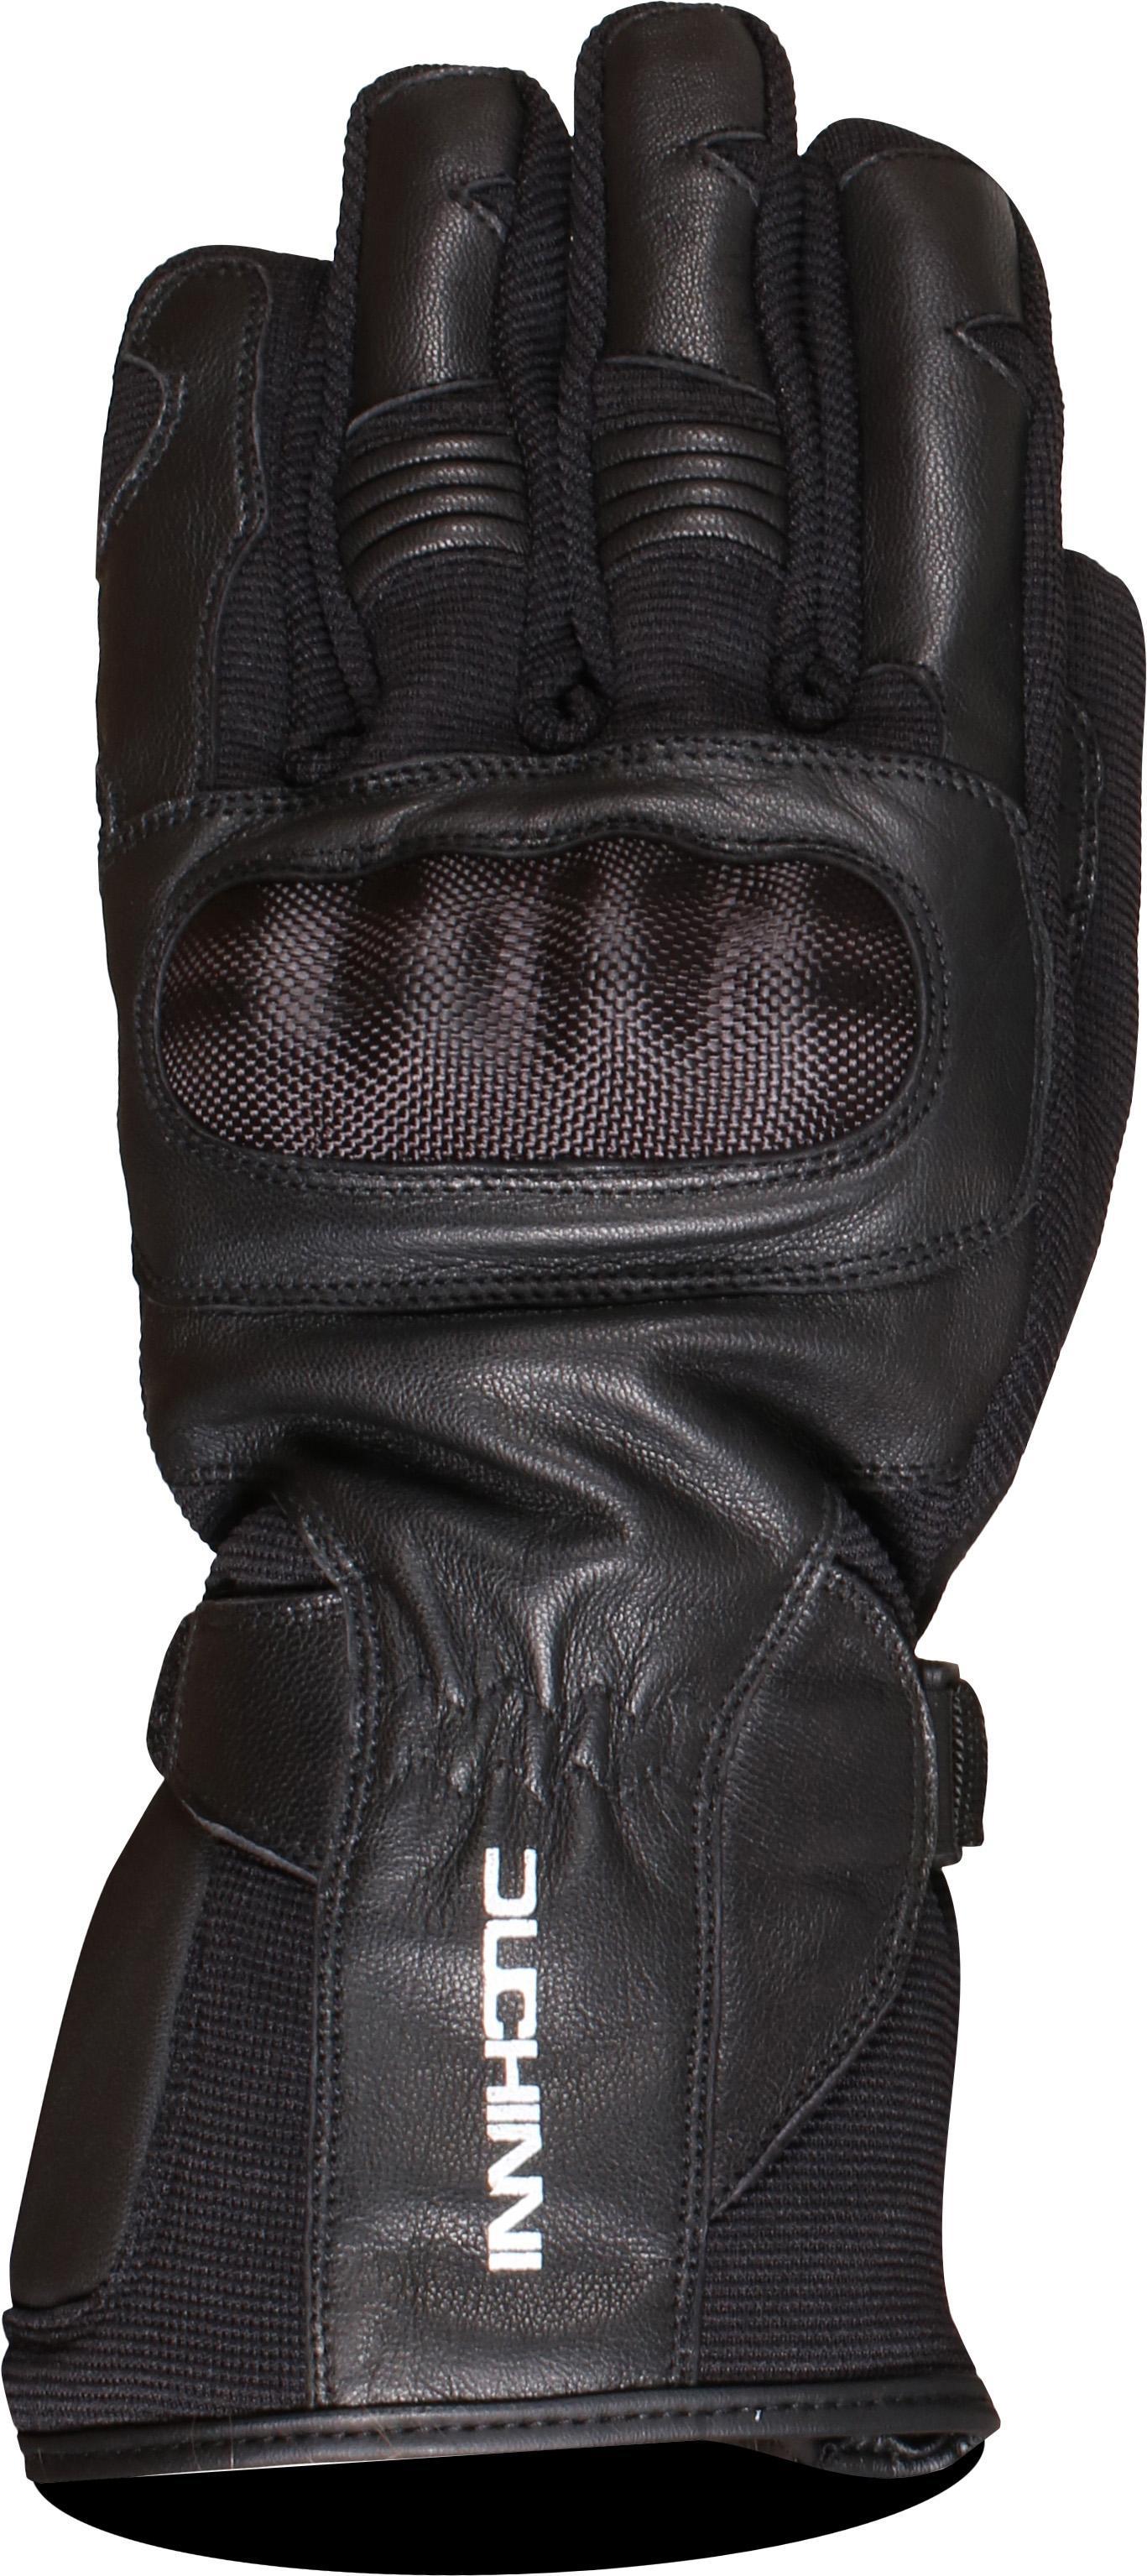 Duchinni Shadow Motorcycle Gloves - Black, S